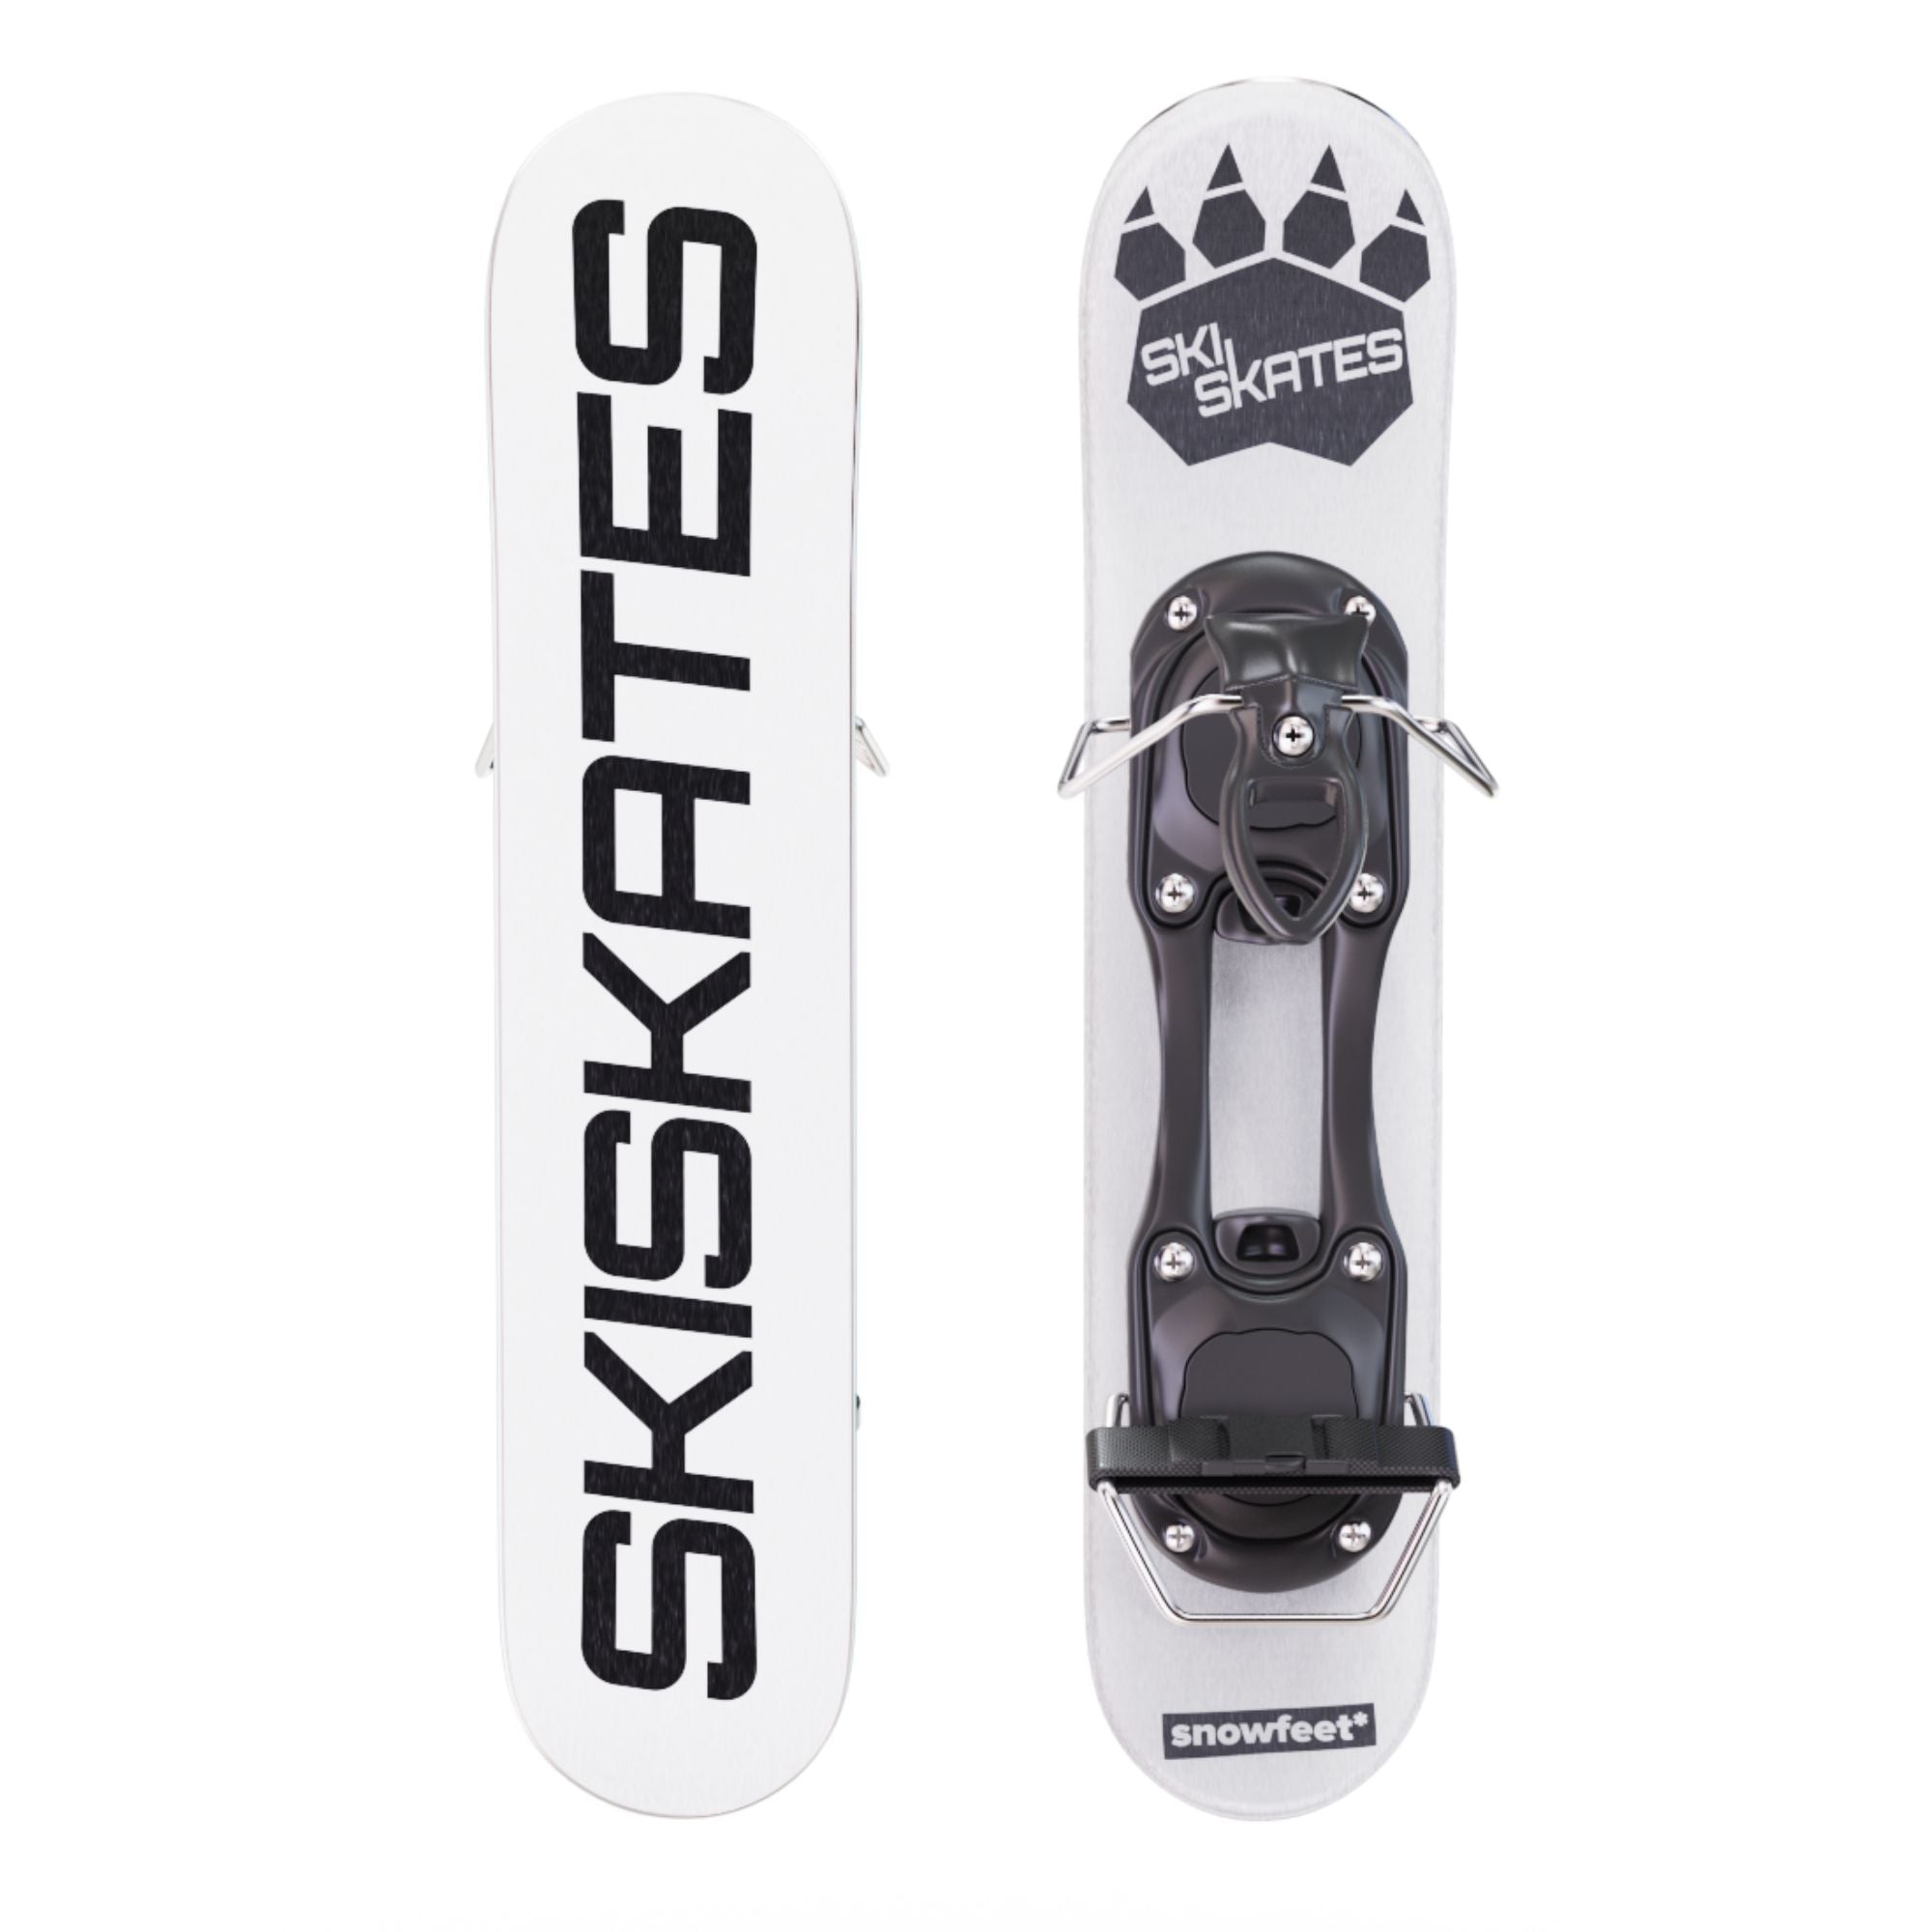 Skiskates Snowboard Boots Model Short Ski by Snowfeet*